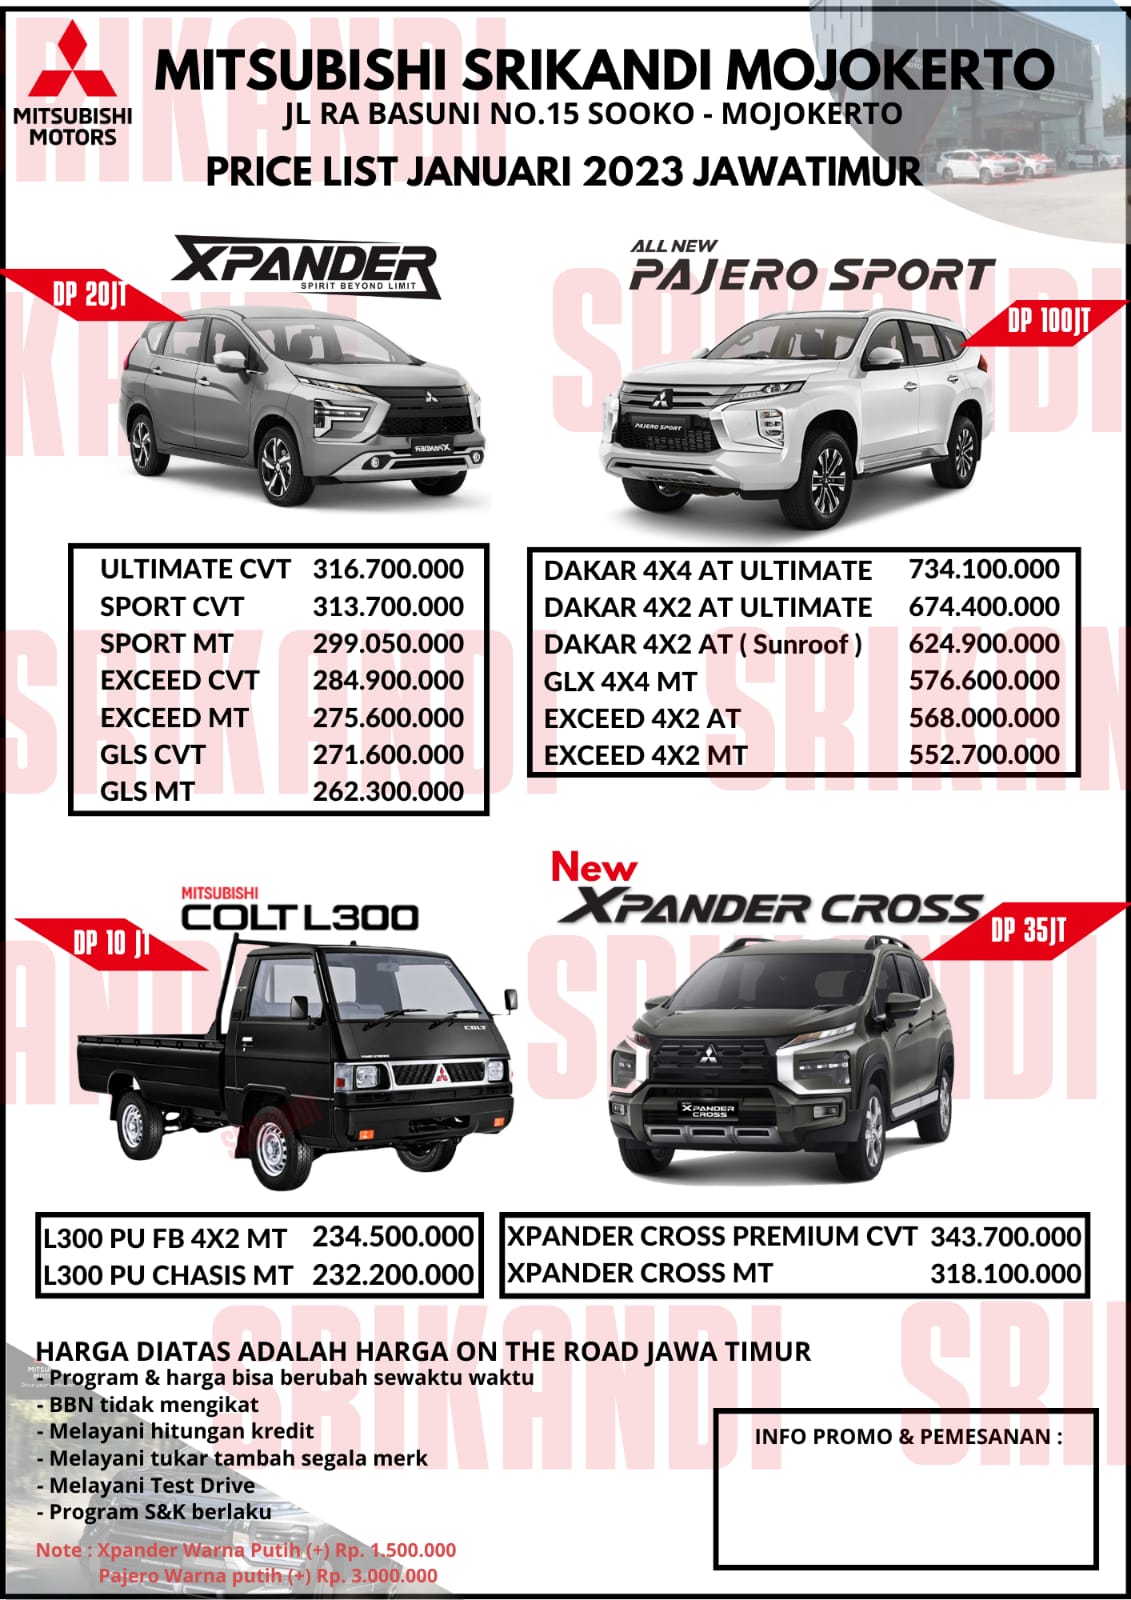 Price List Mitsubishi Mojokerto